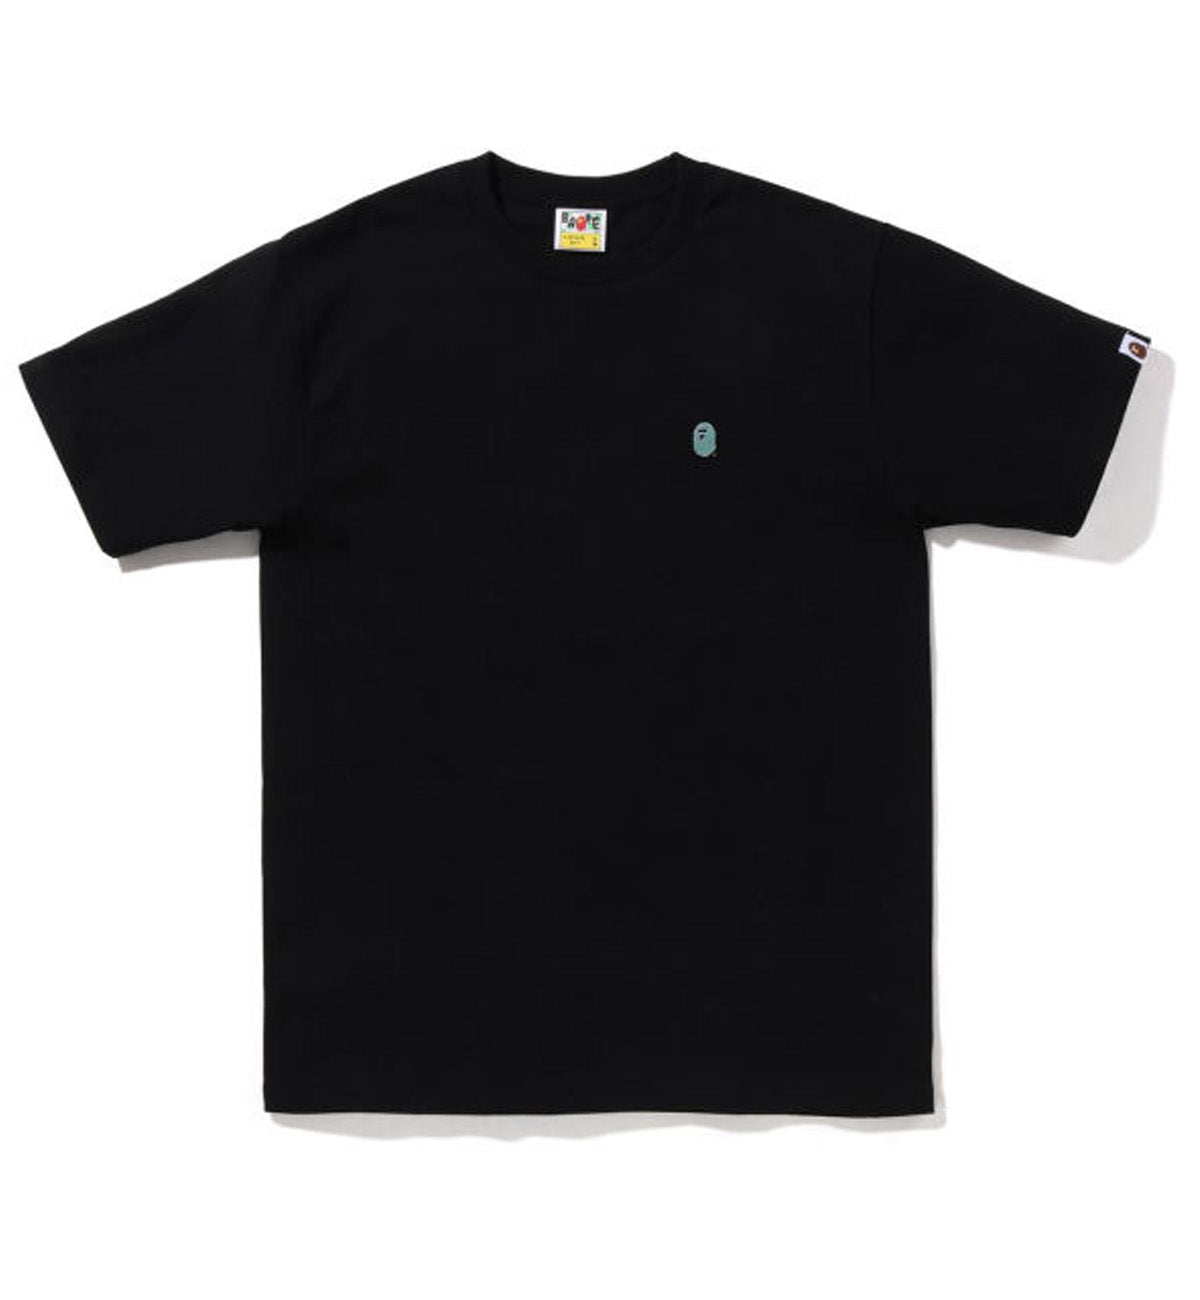 Bape Aqua Ape Head T-Shirt (Black)